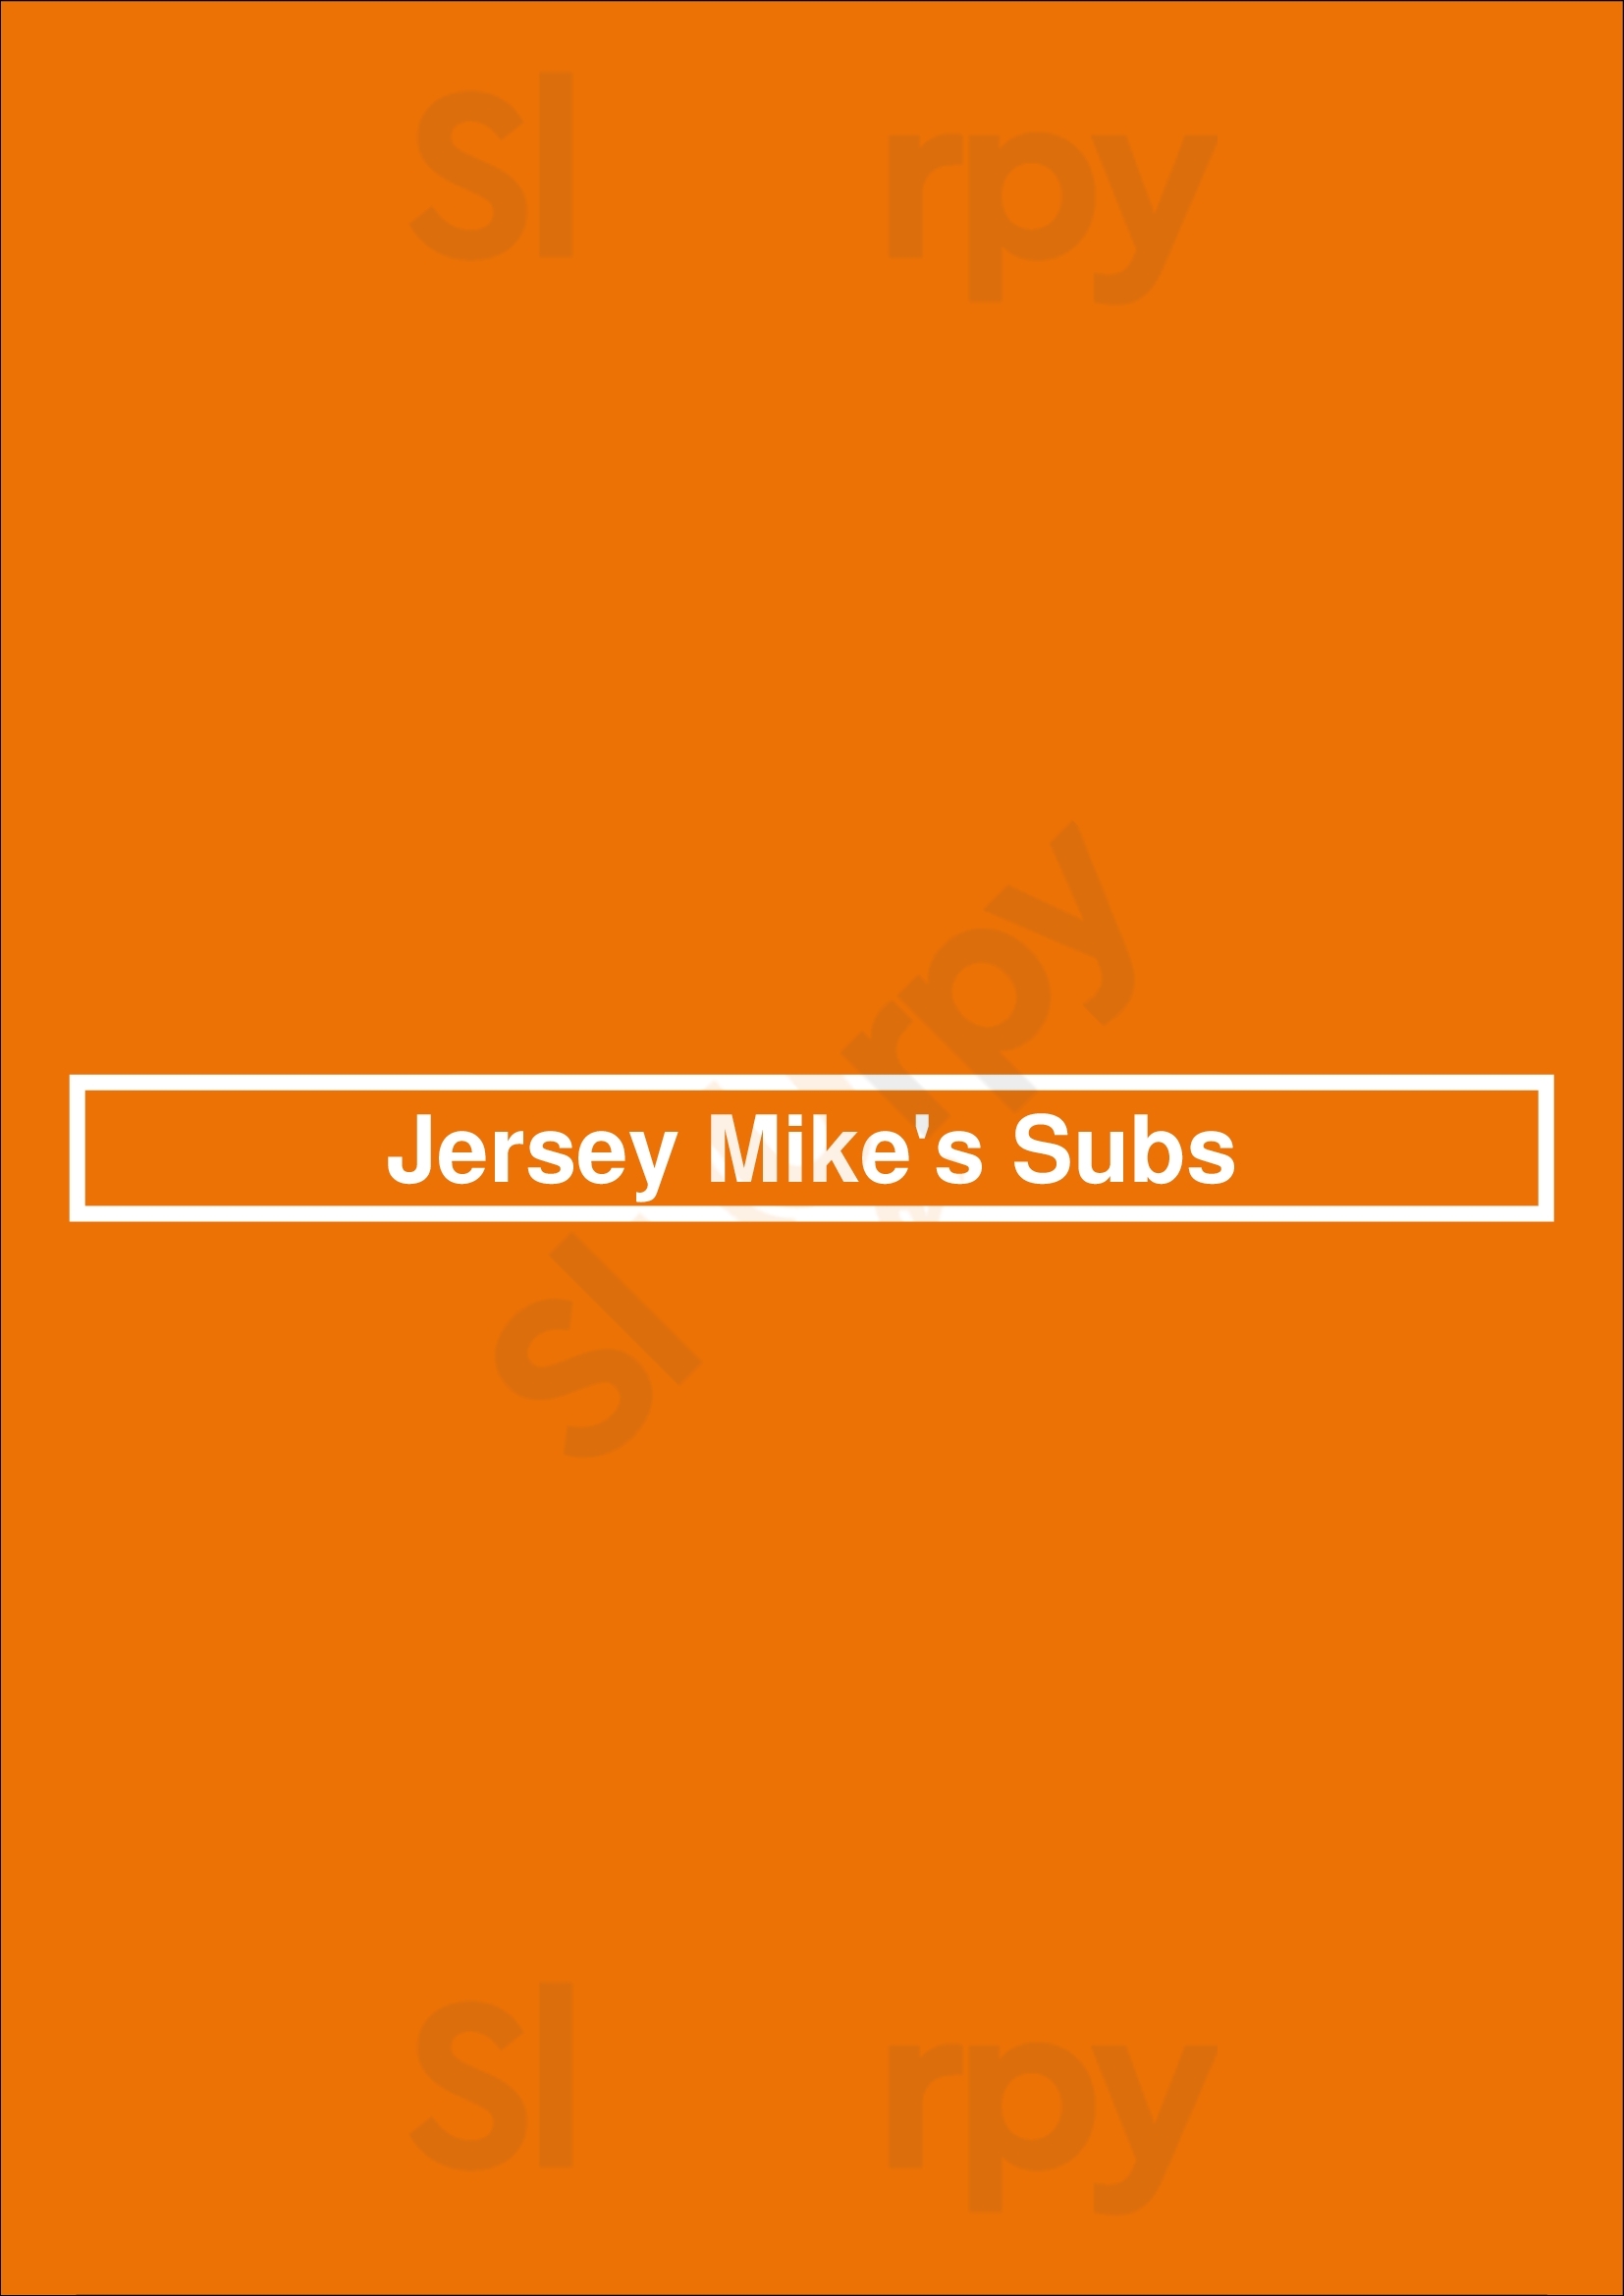 Jersey Mike's Subs Lancaster Menu - 1